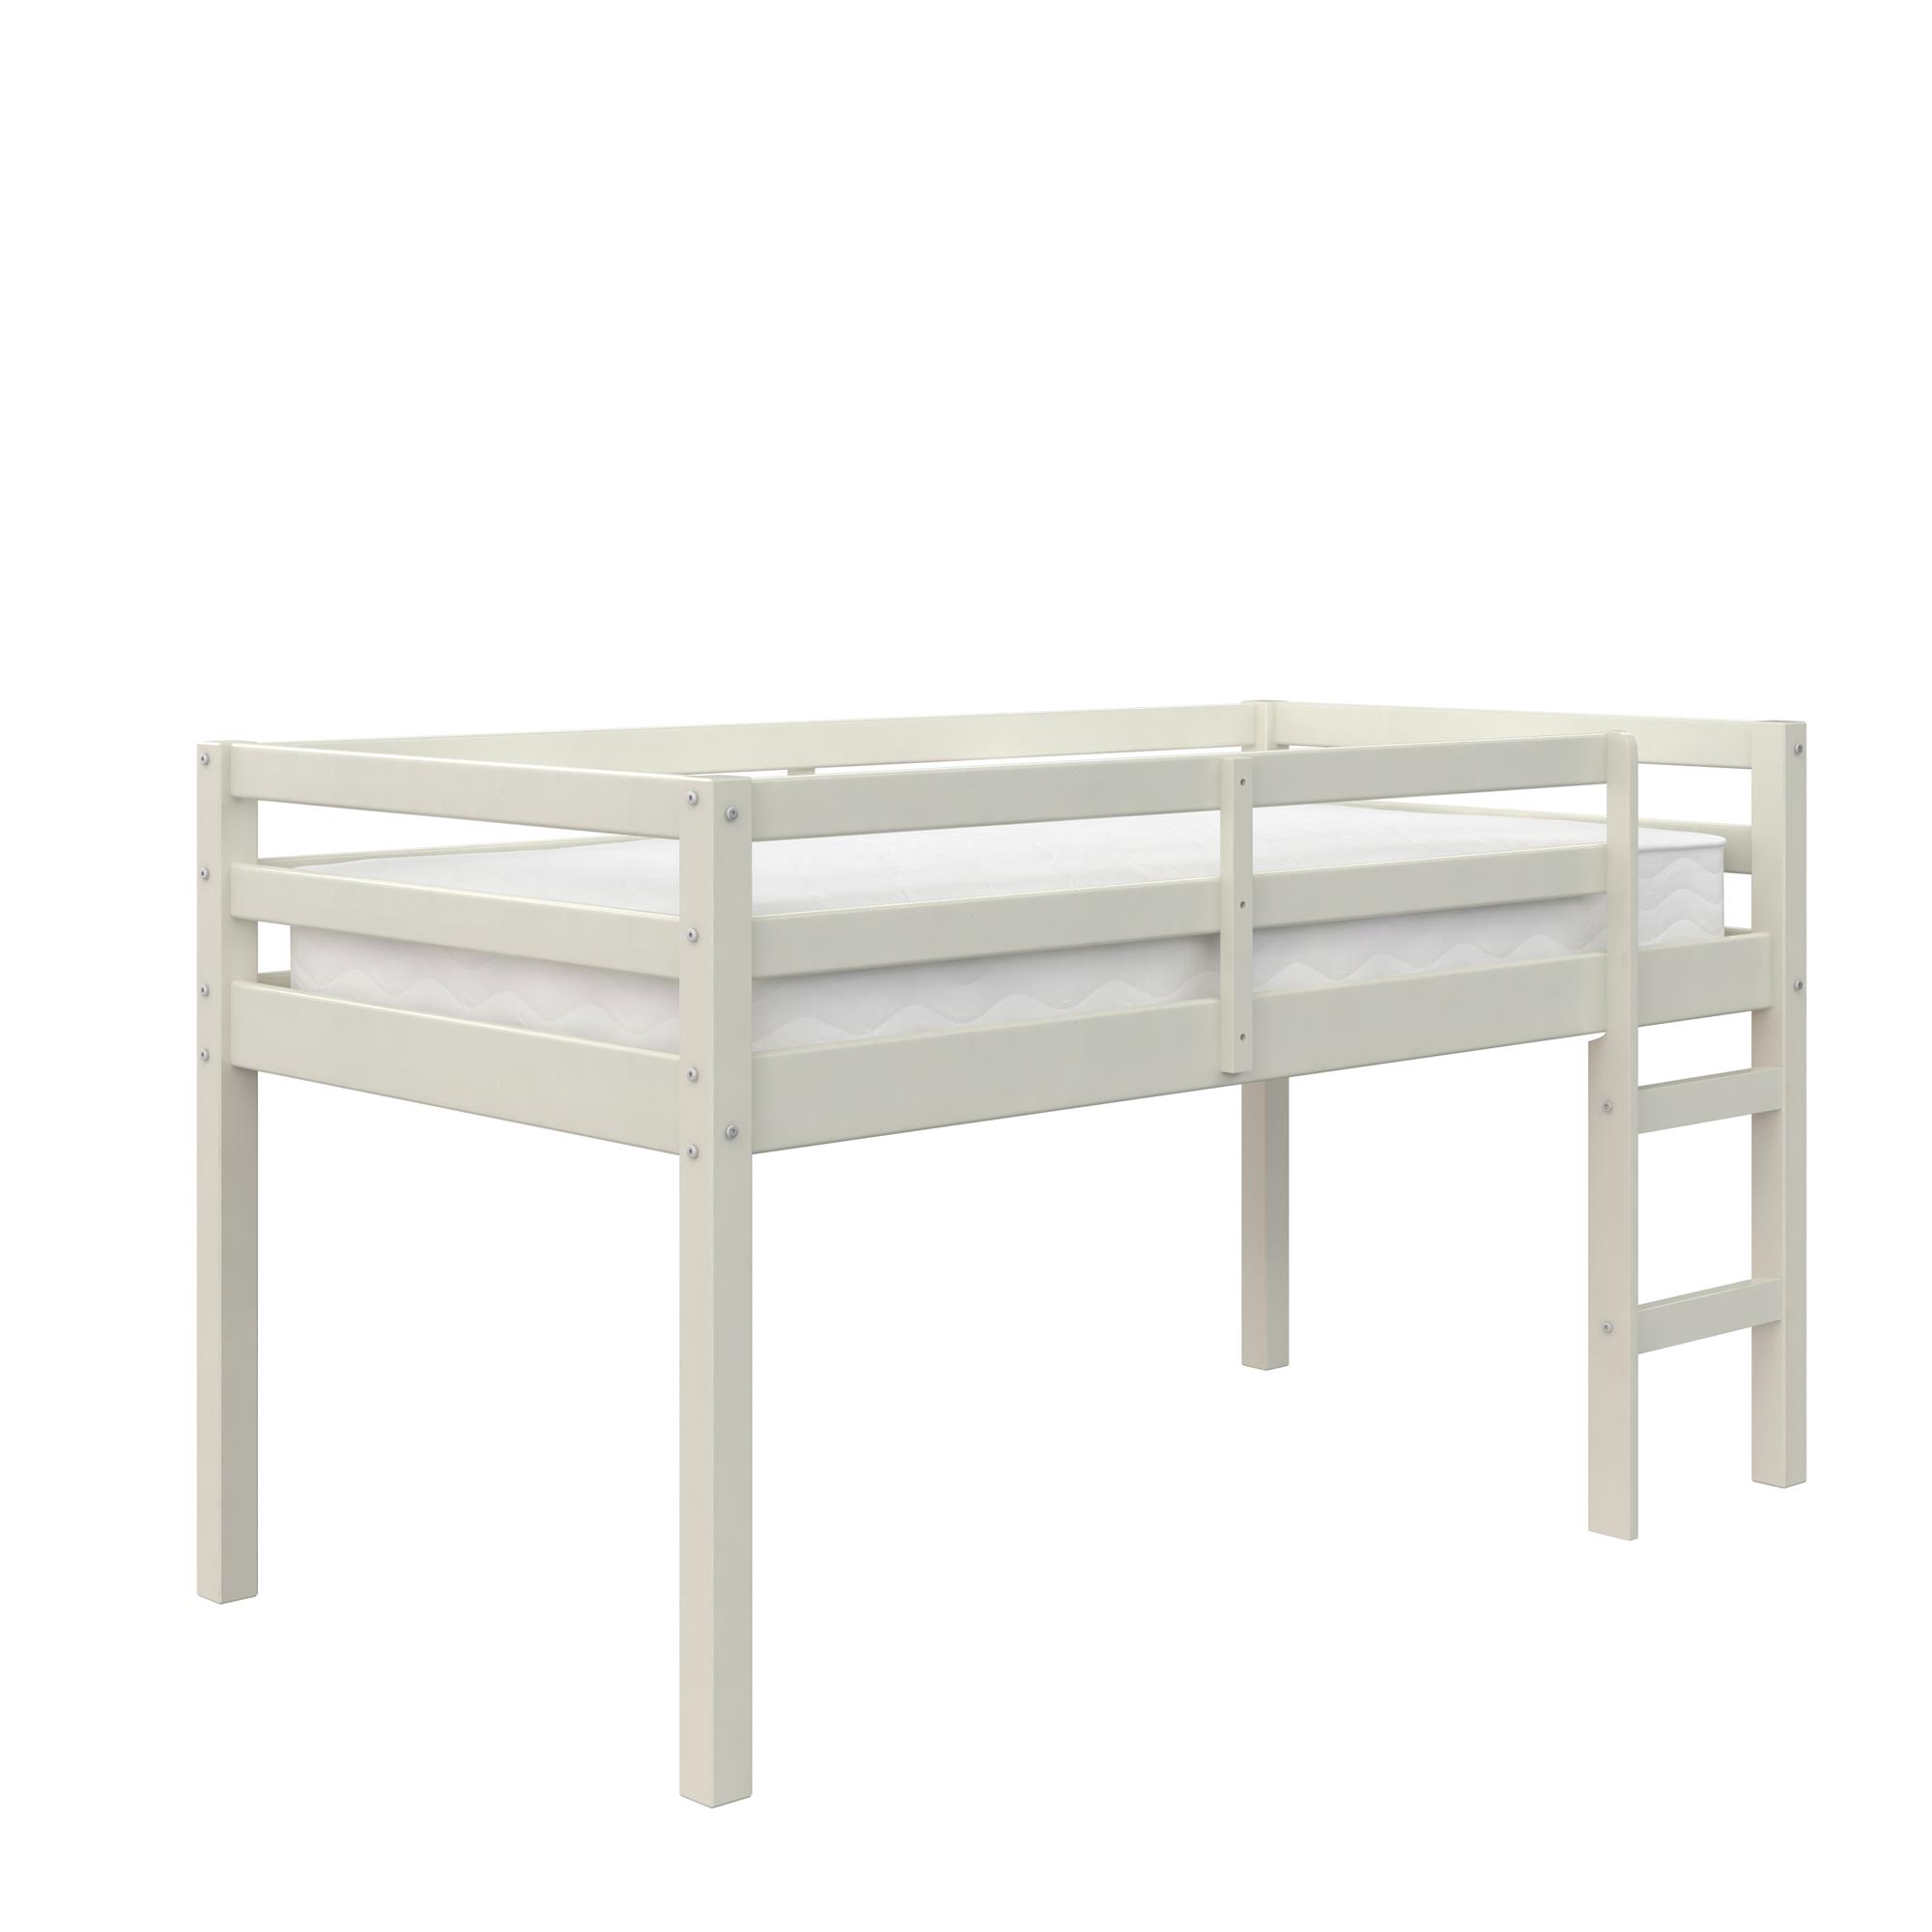 DHP Benson Junior Twin Loft Bed, White - image 3 of 13